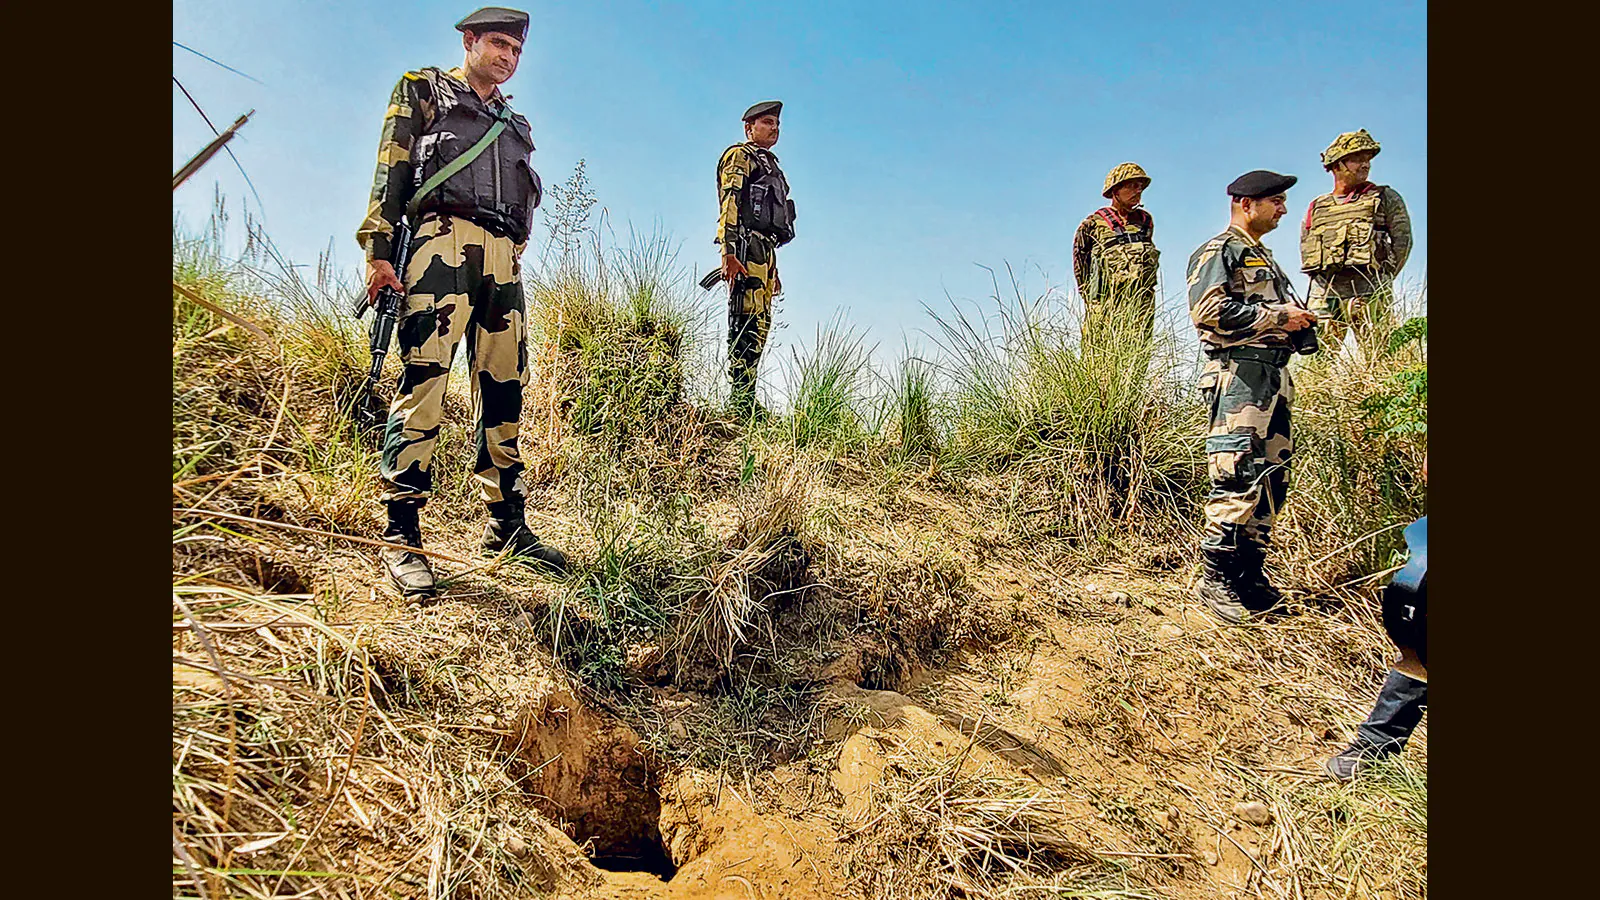 Security of international border responsibility of Centre: Punjab minister Harjot Singh Bains